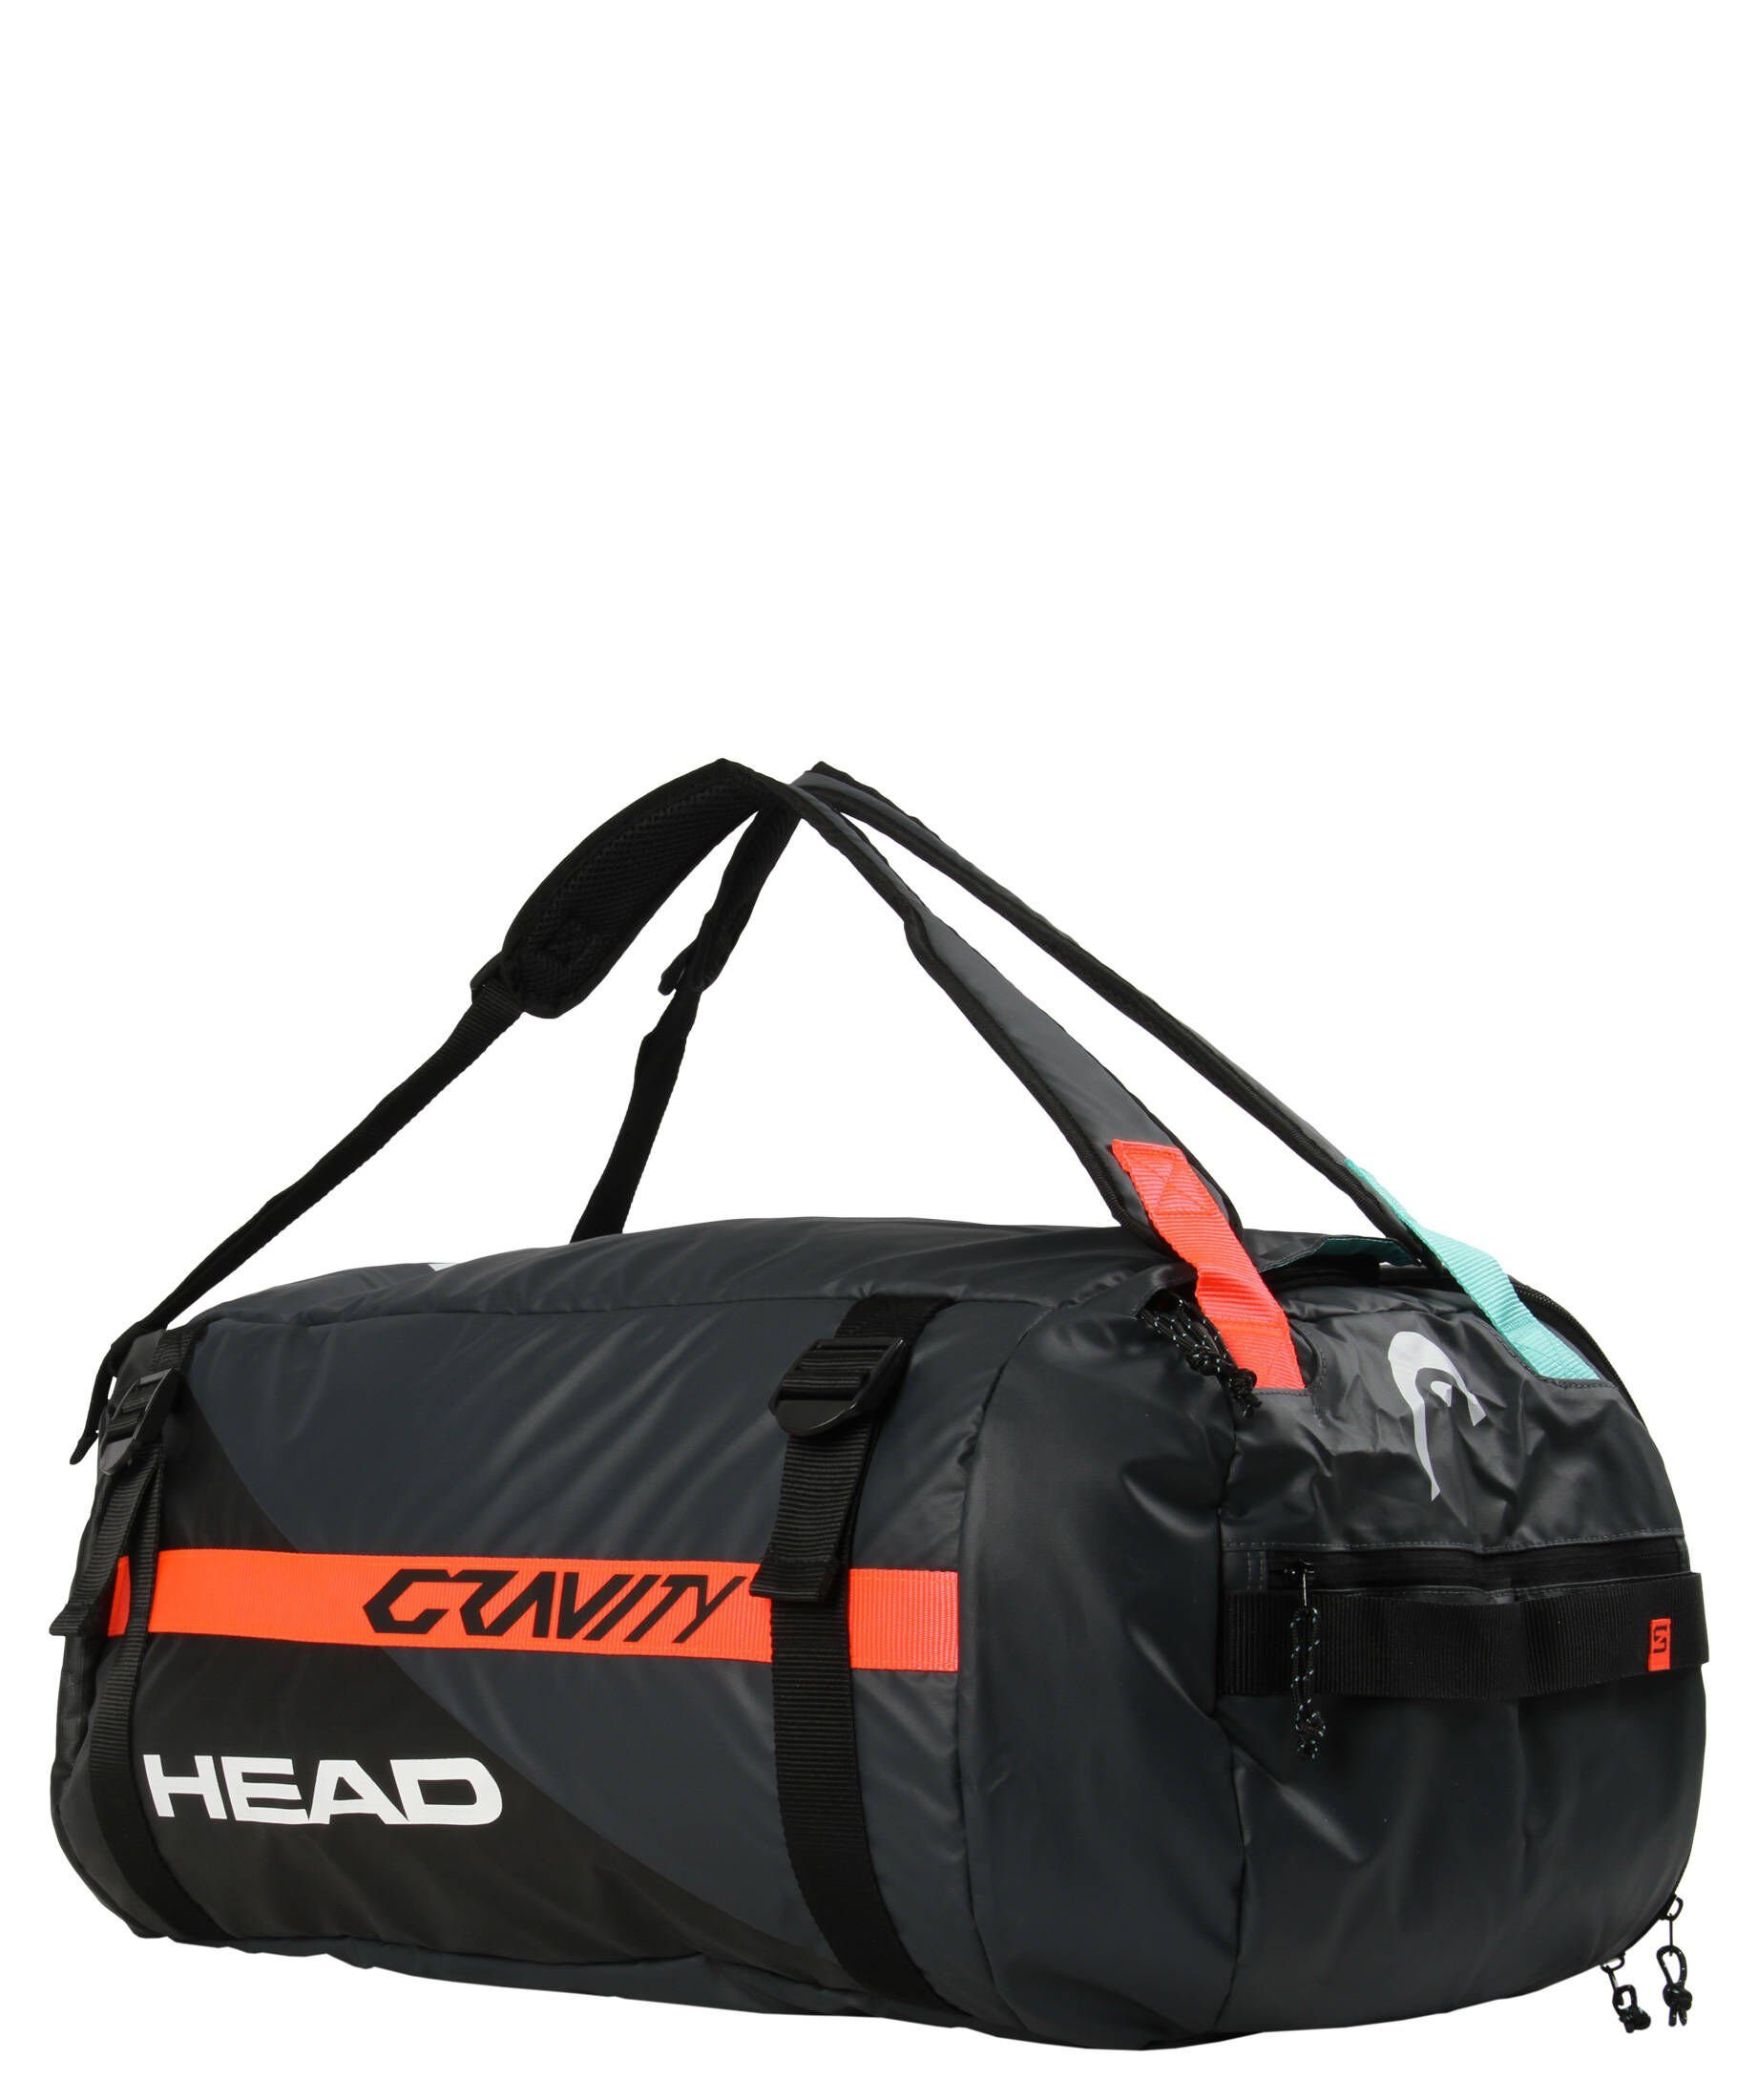 Head Tennistasche Tennistasche "Gravity Duffle Bag"